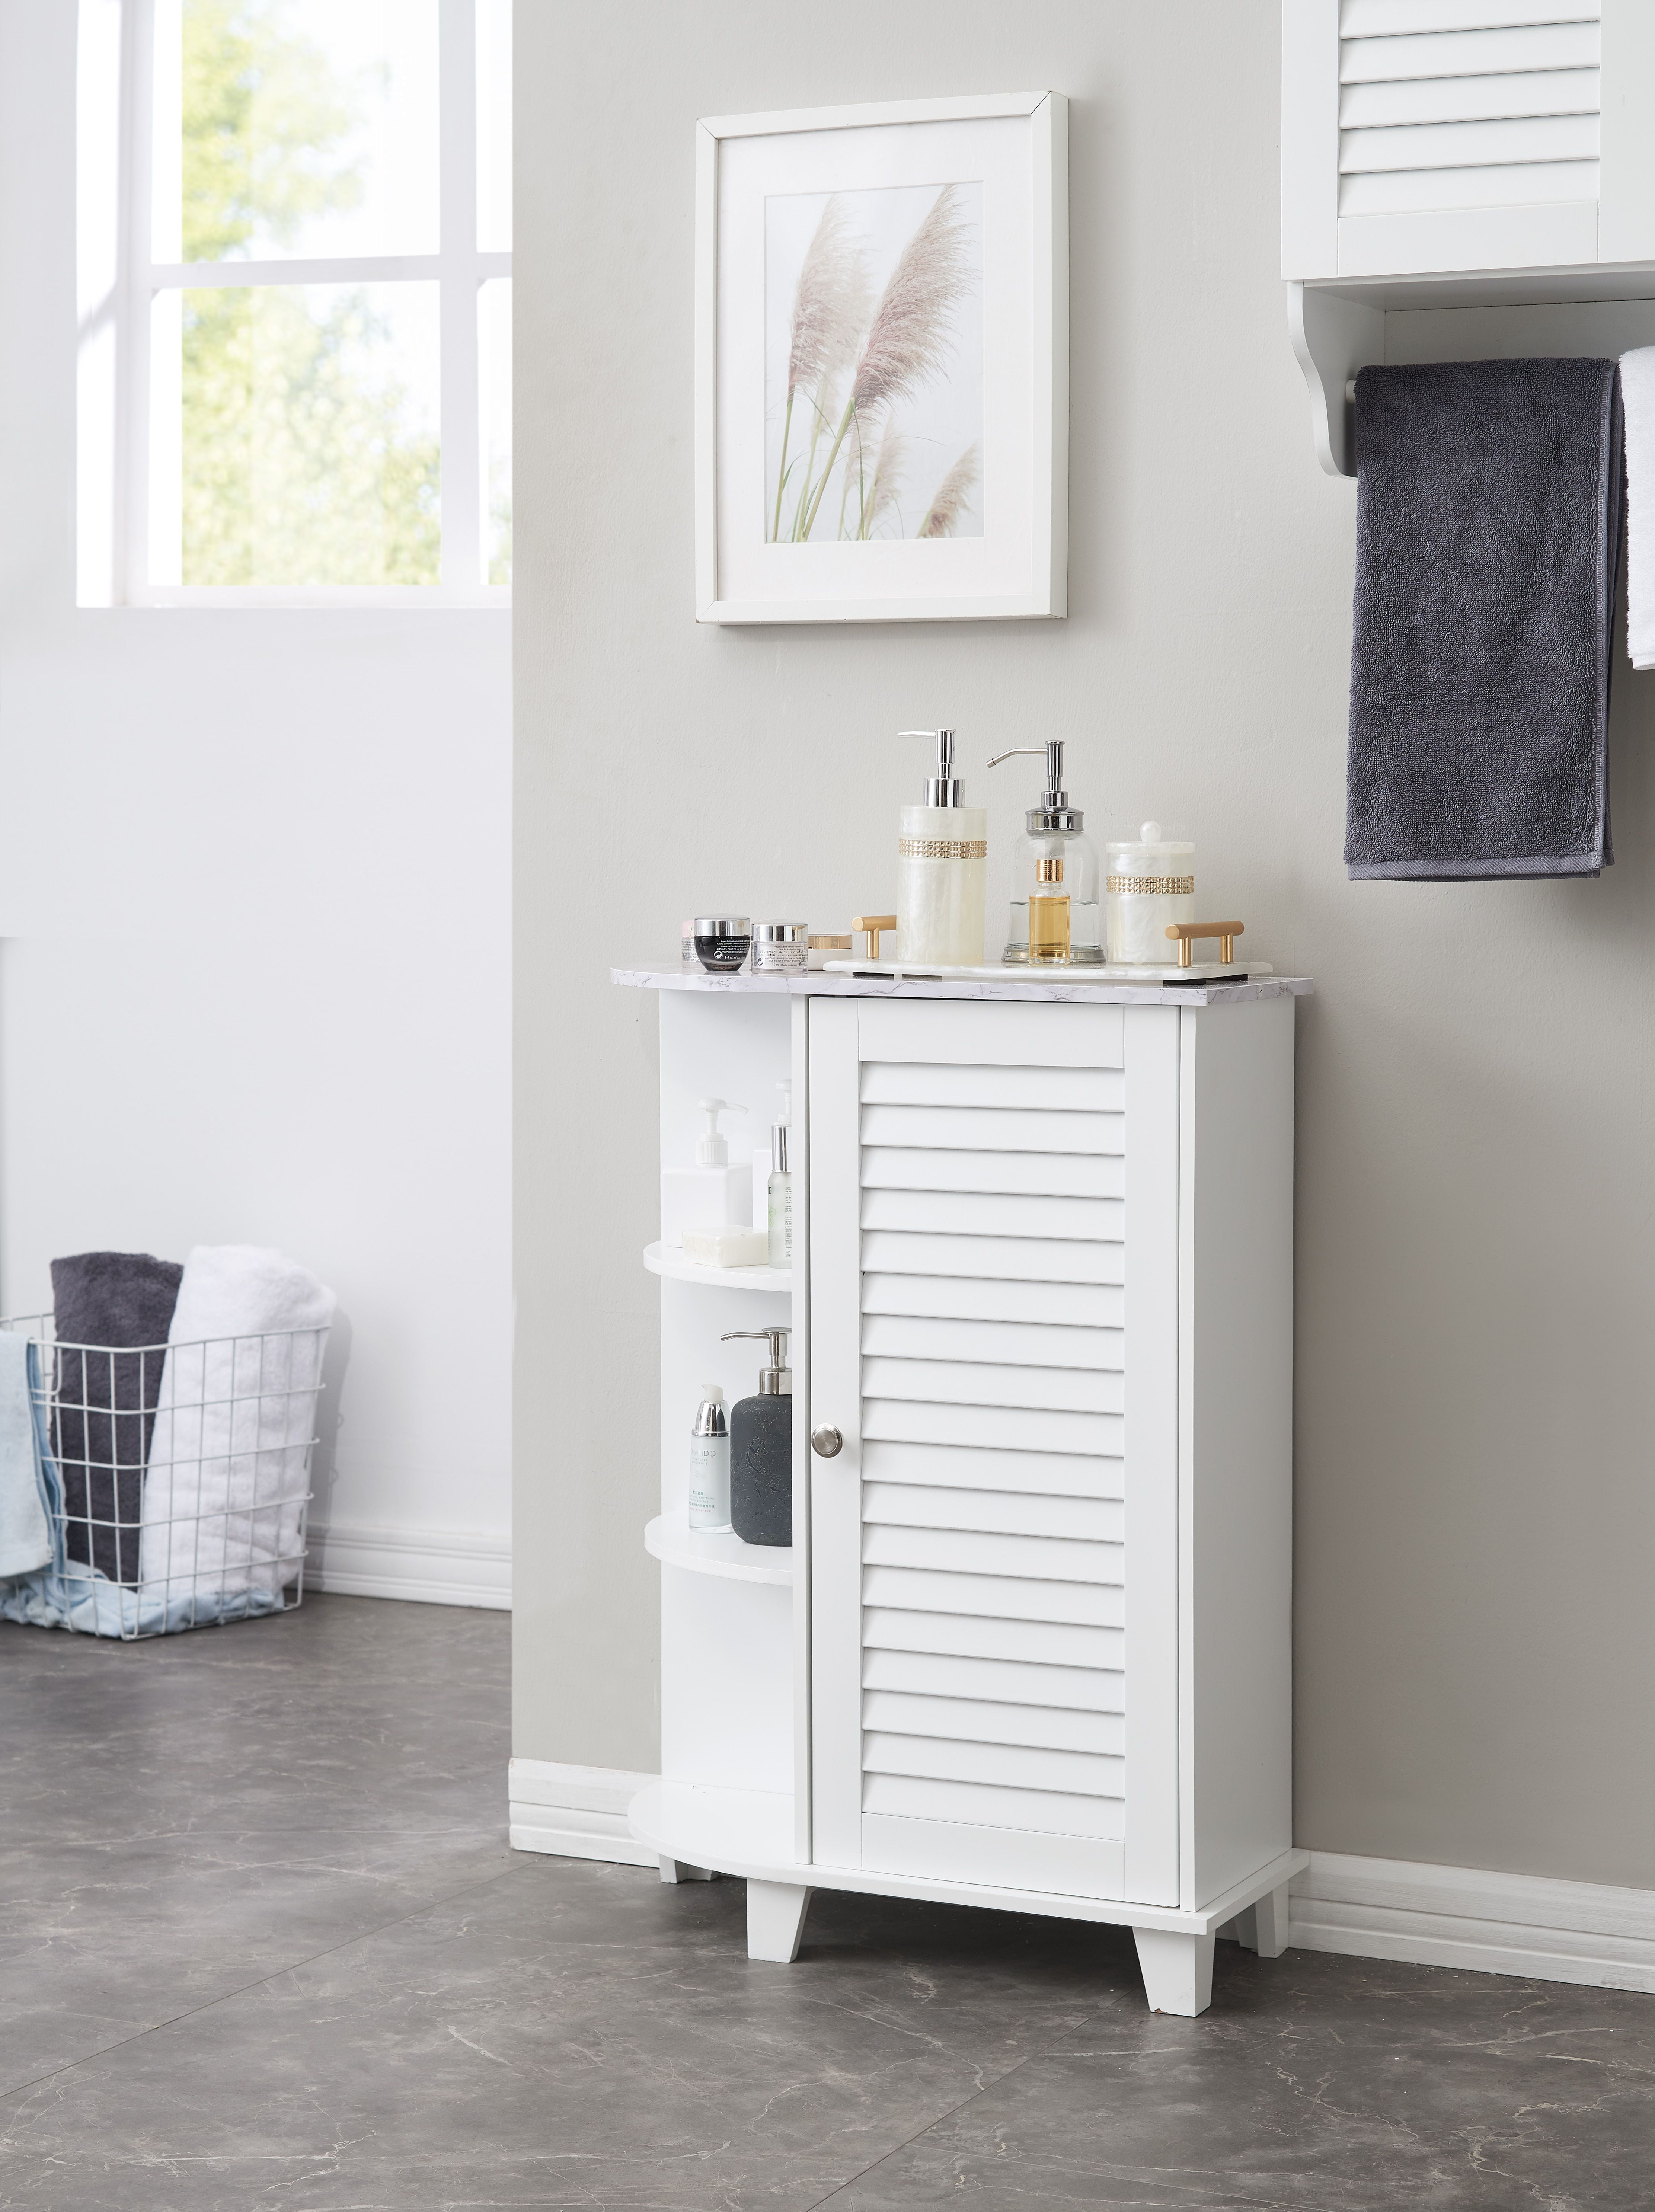 Trevita Bathroom Storage Floor Cabinet Organizer With Adjustable Shelf ...